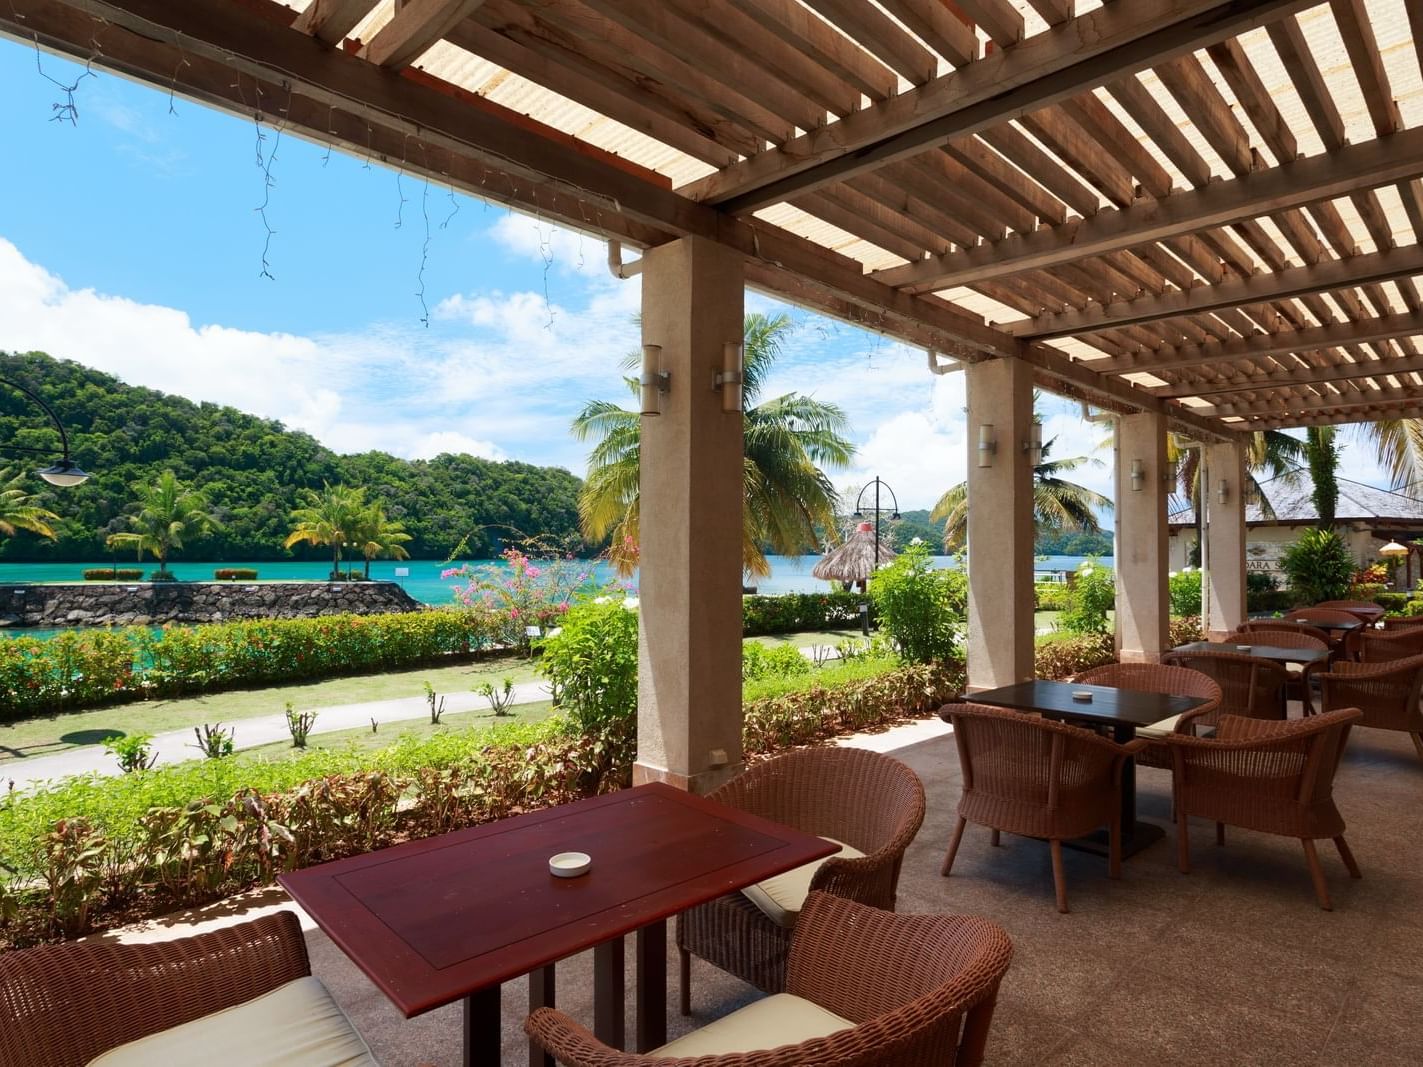 Outdoor dining in Waves Restaurant at Palau Royal Resort